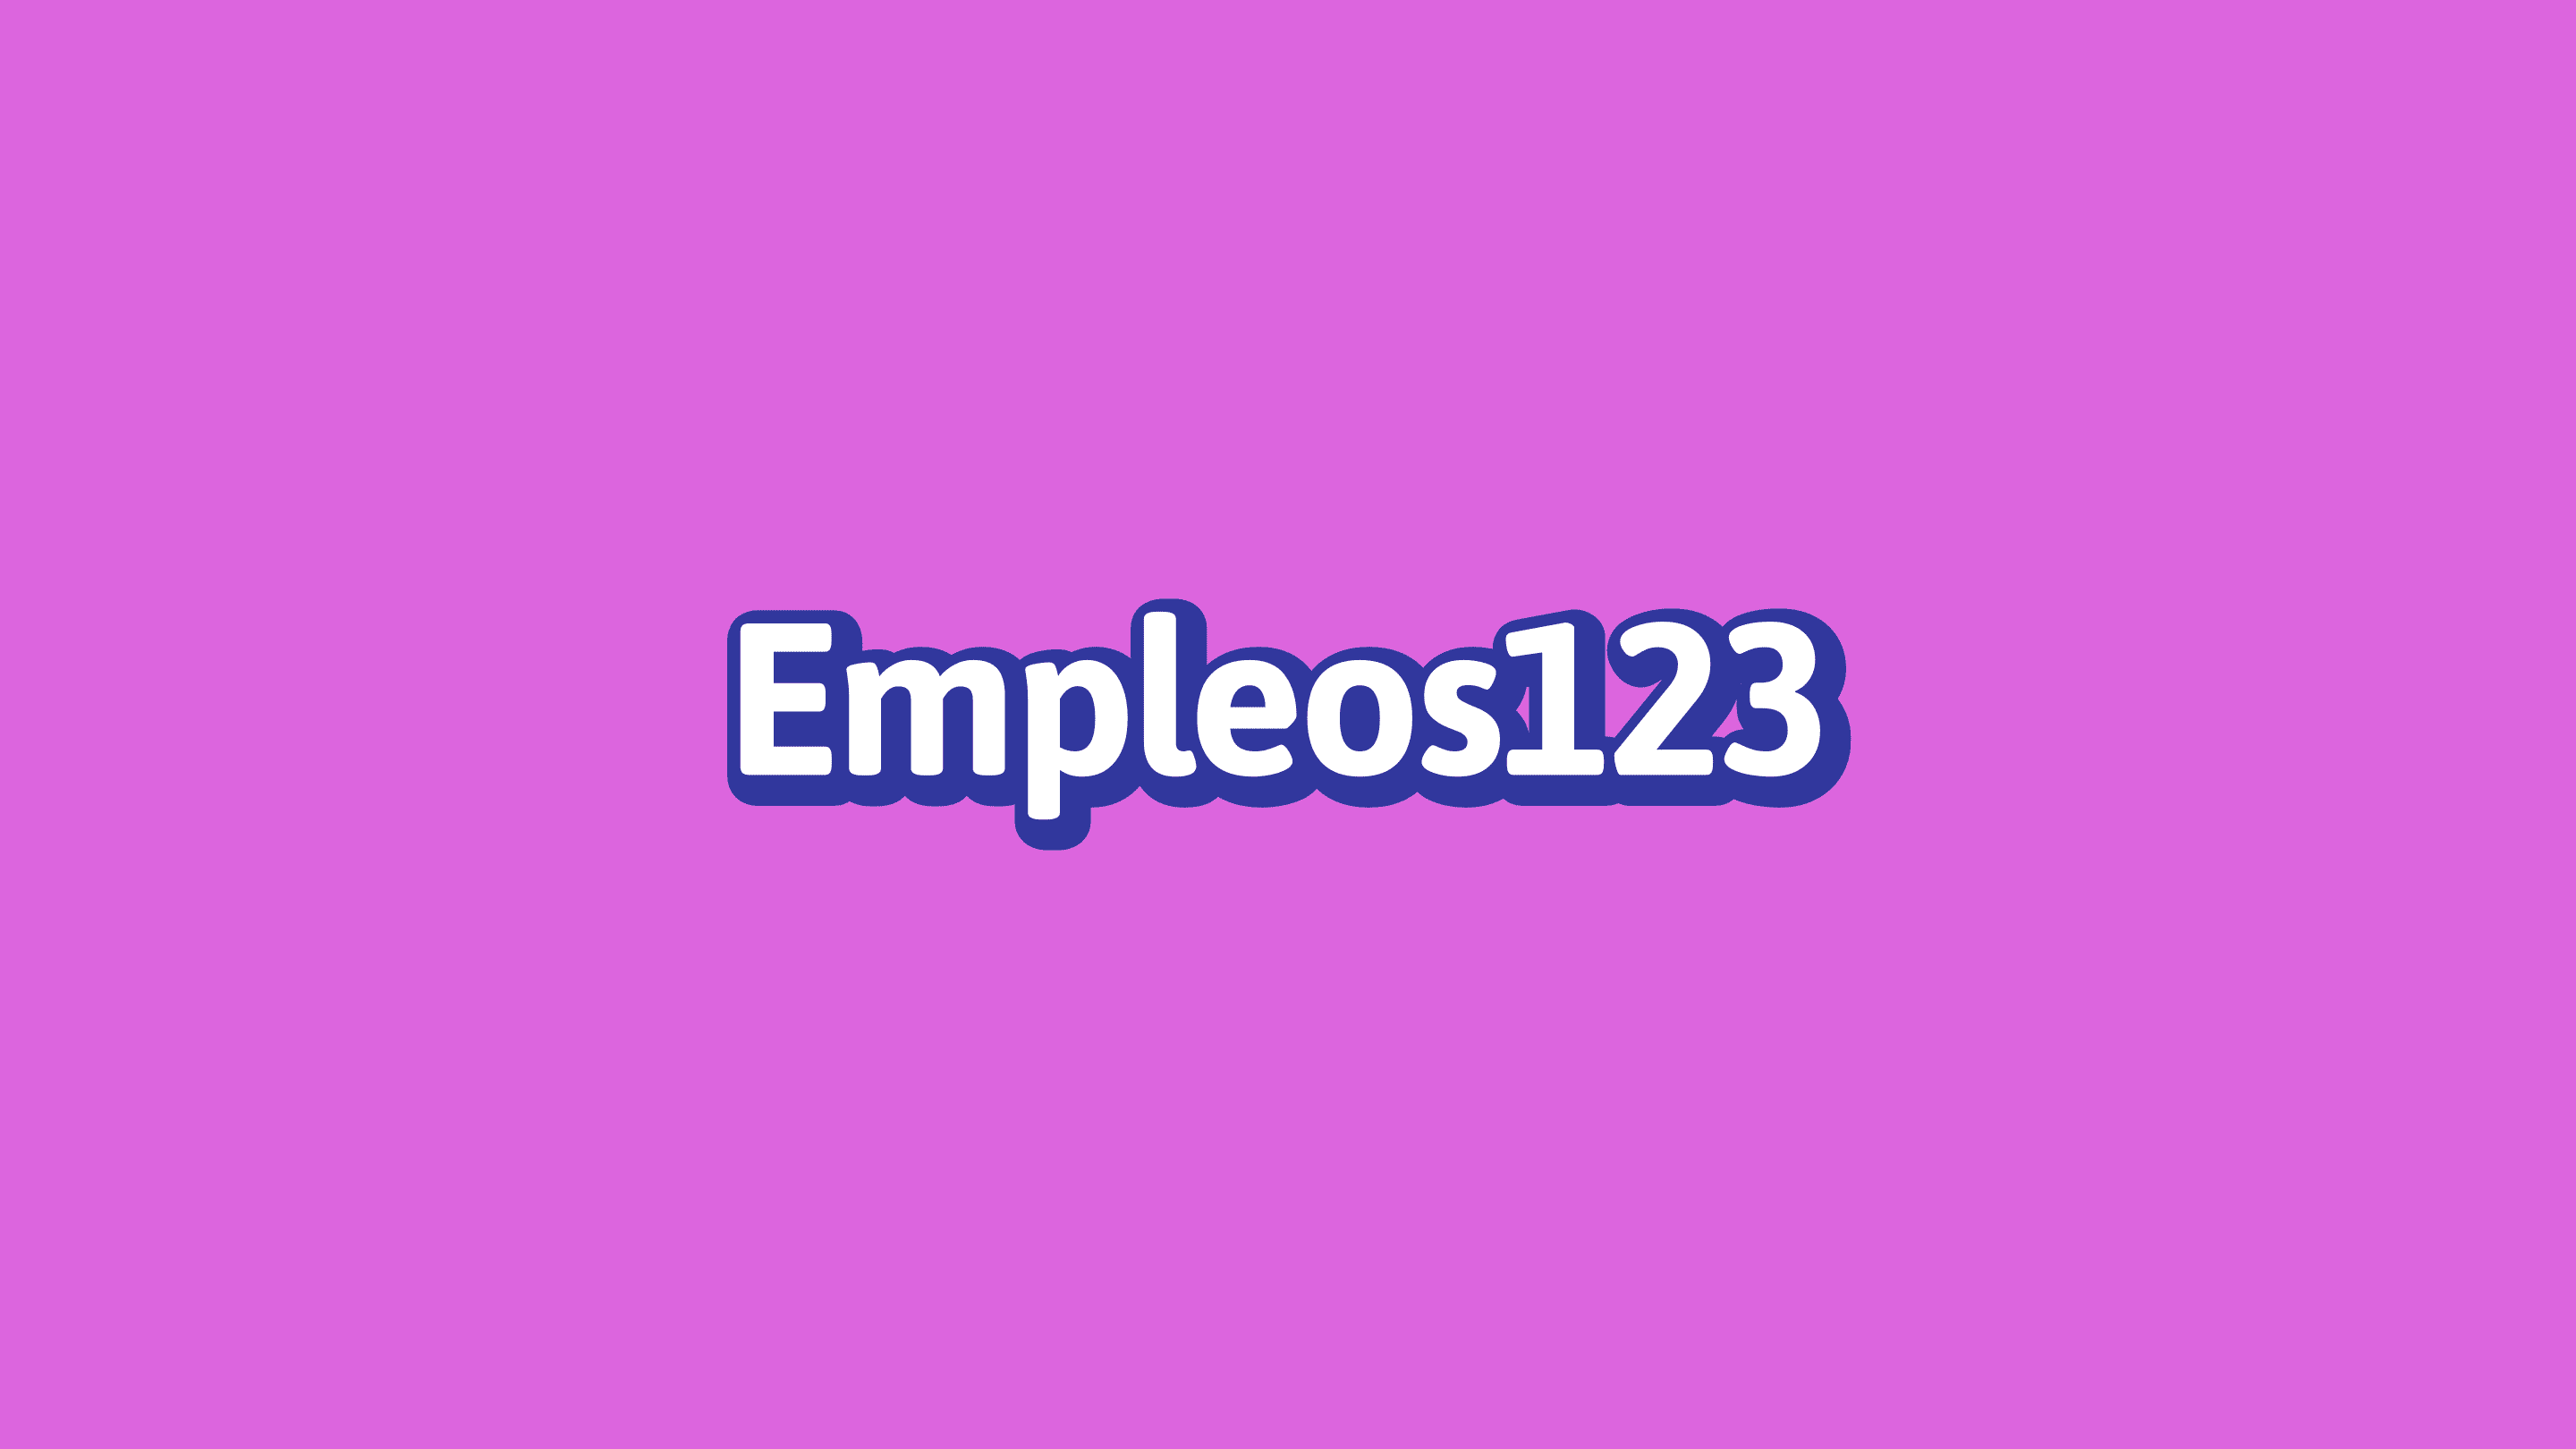 Empleos123